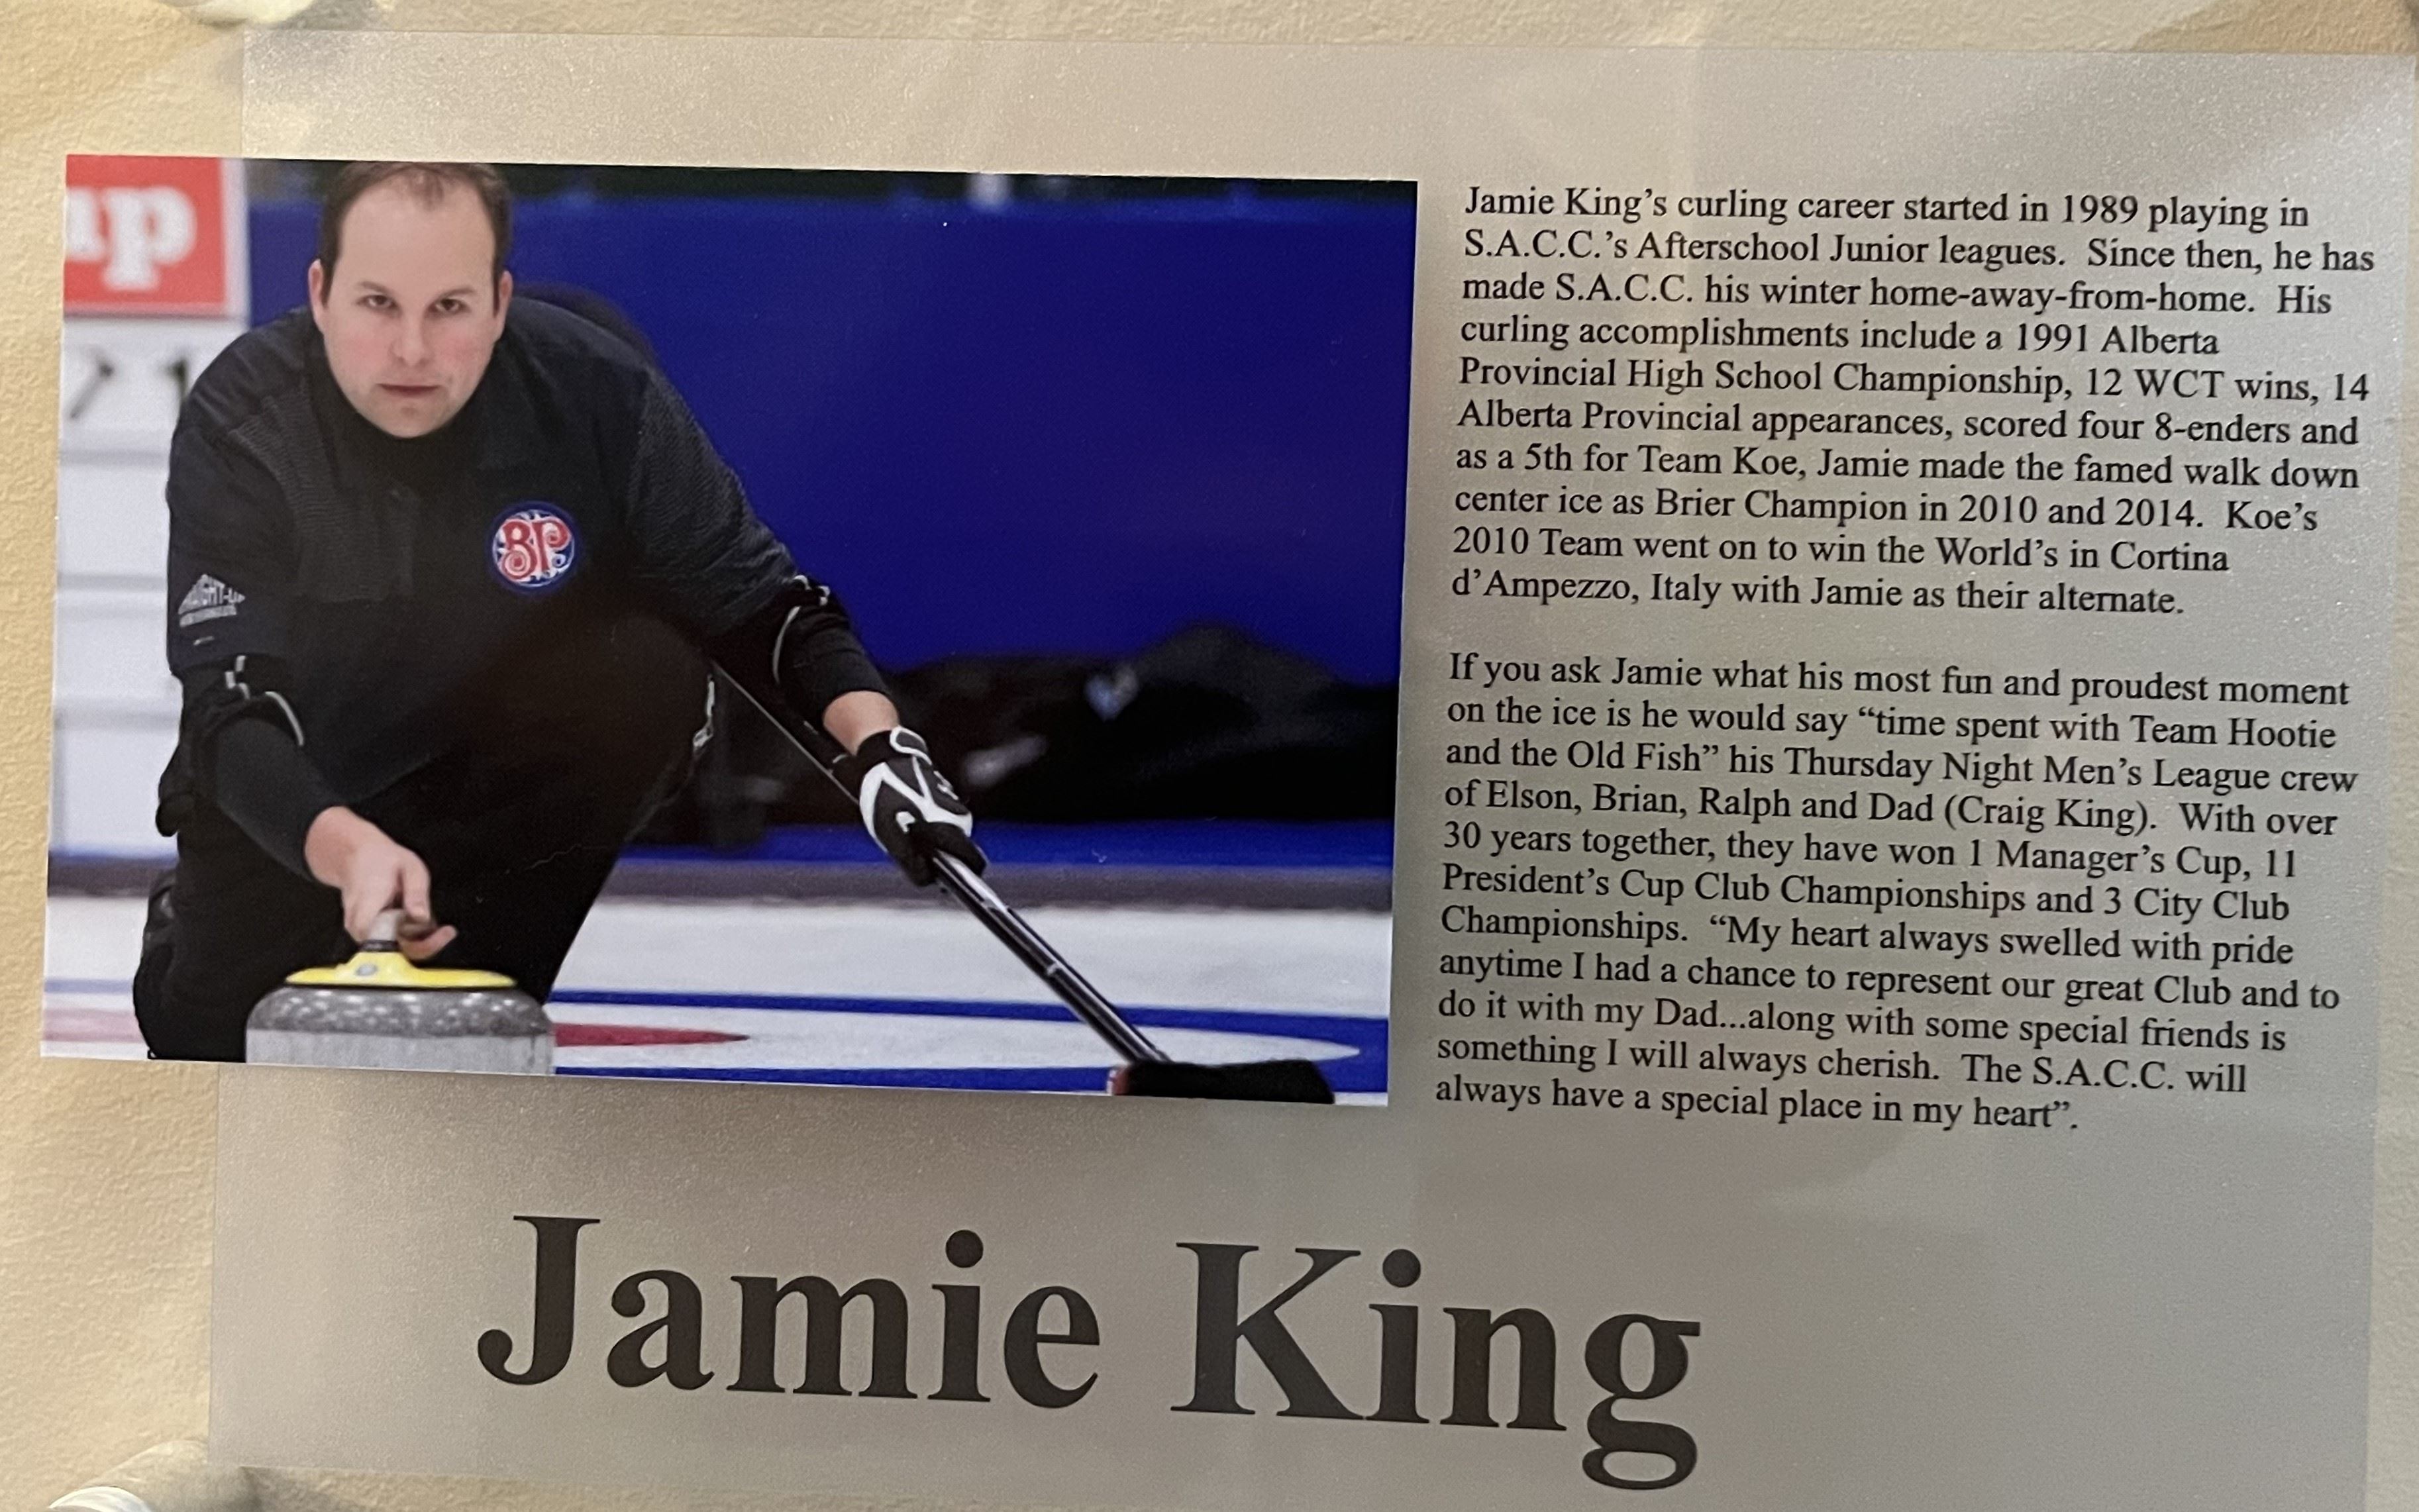 Jamie King